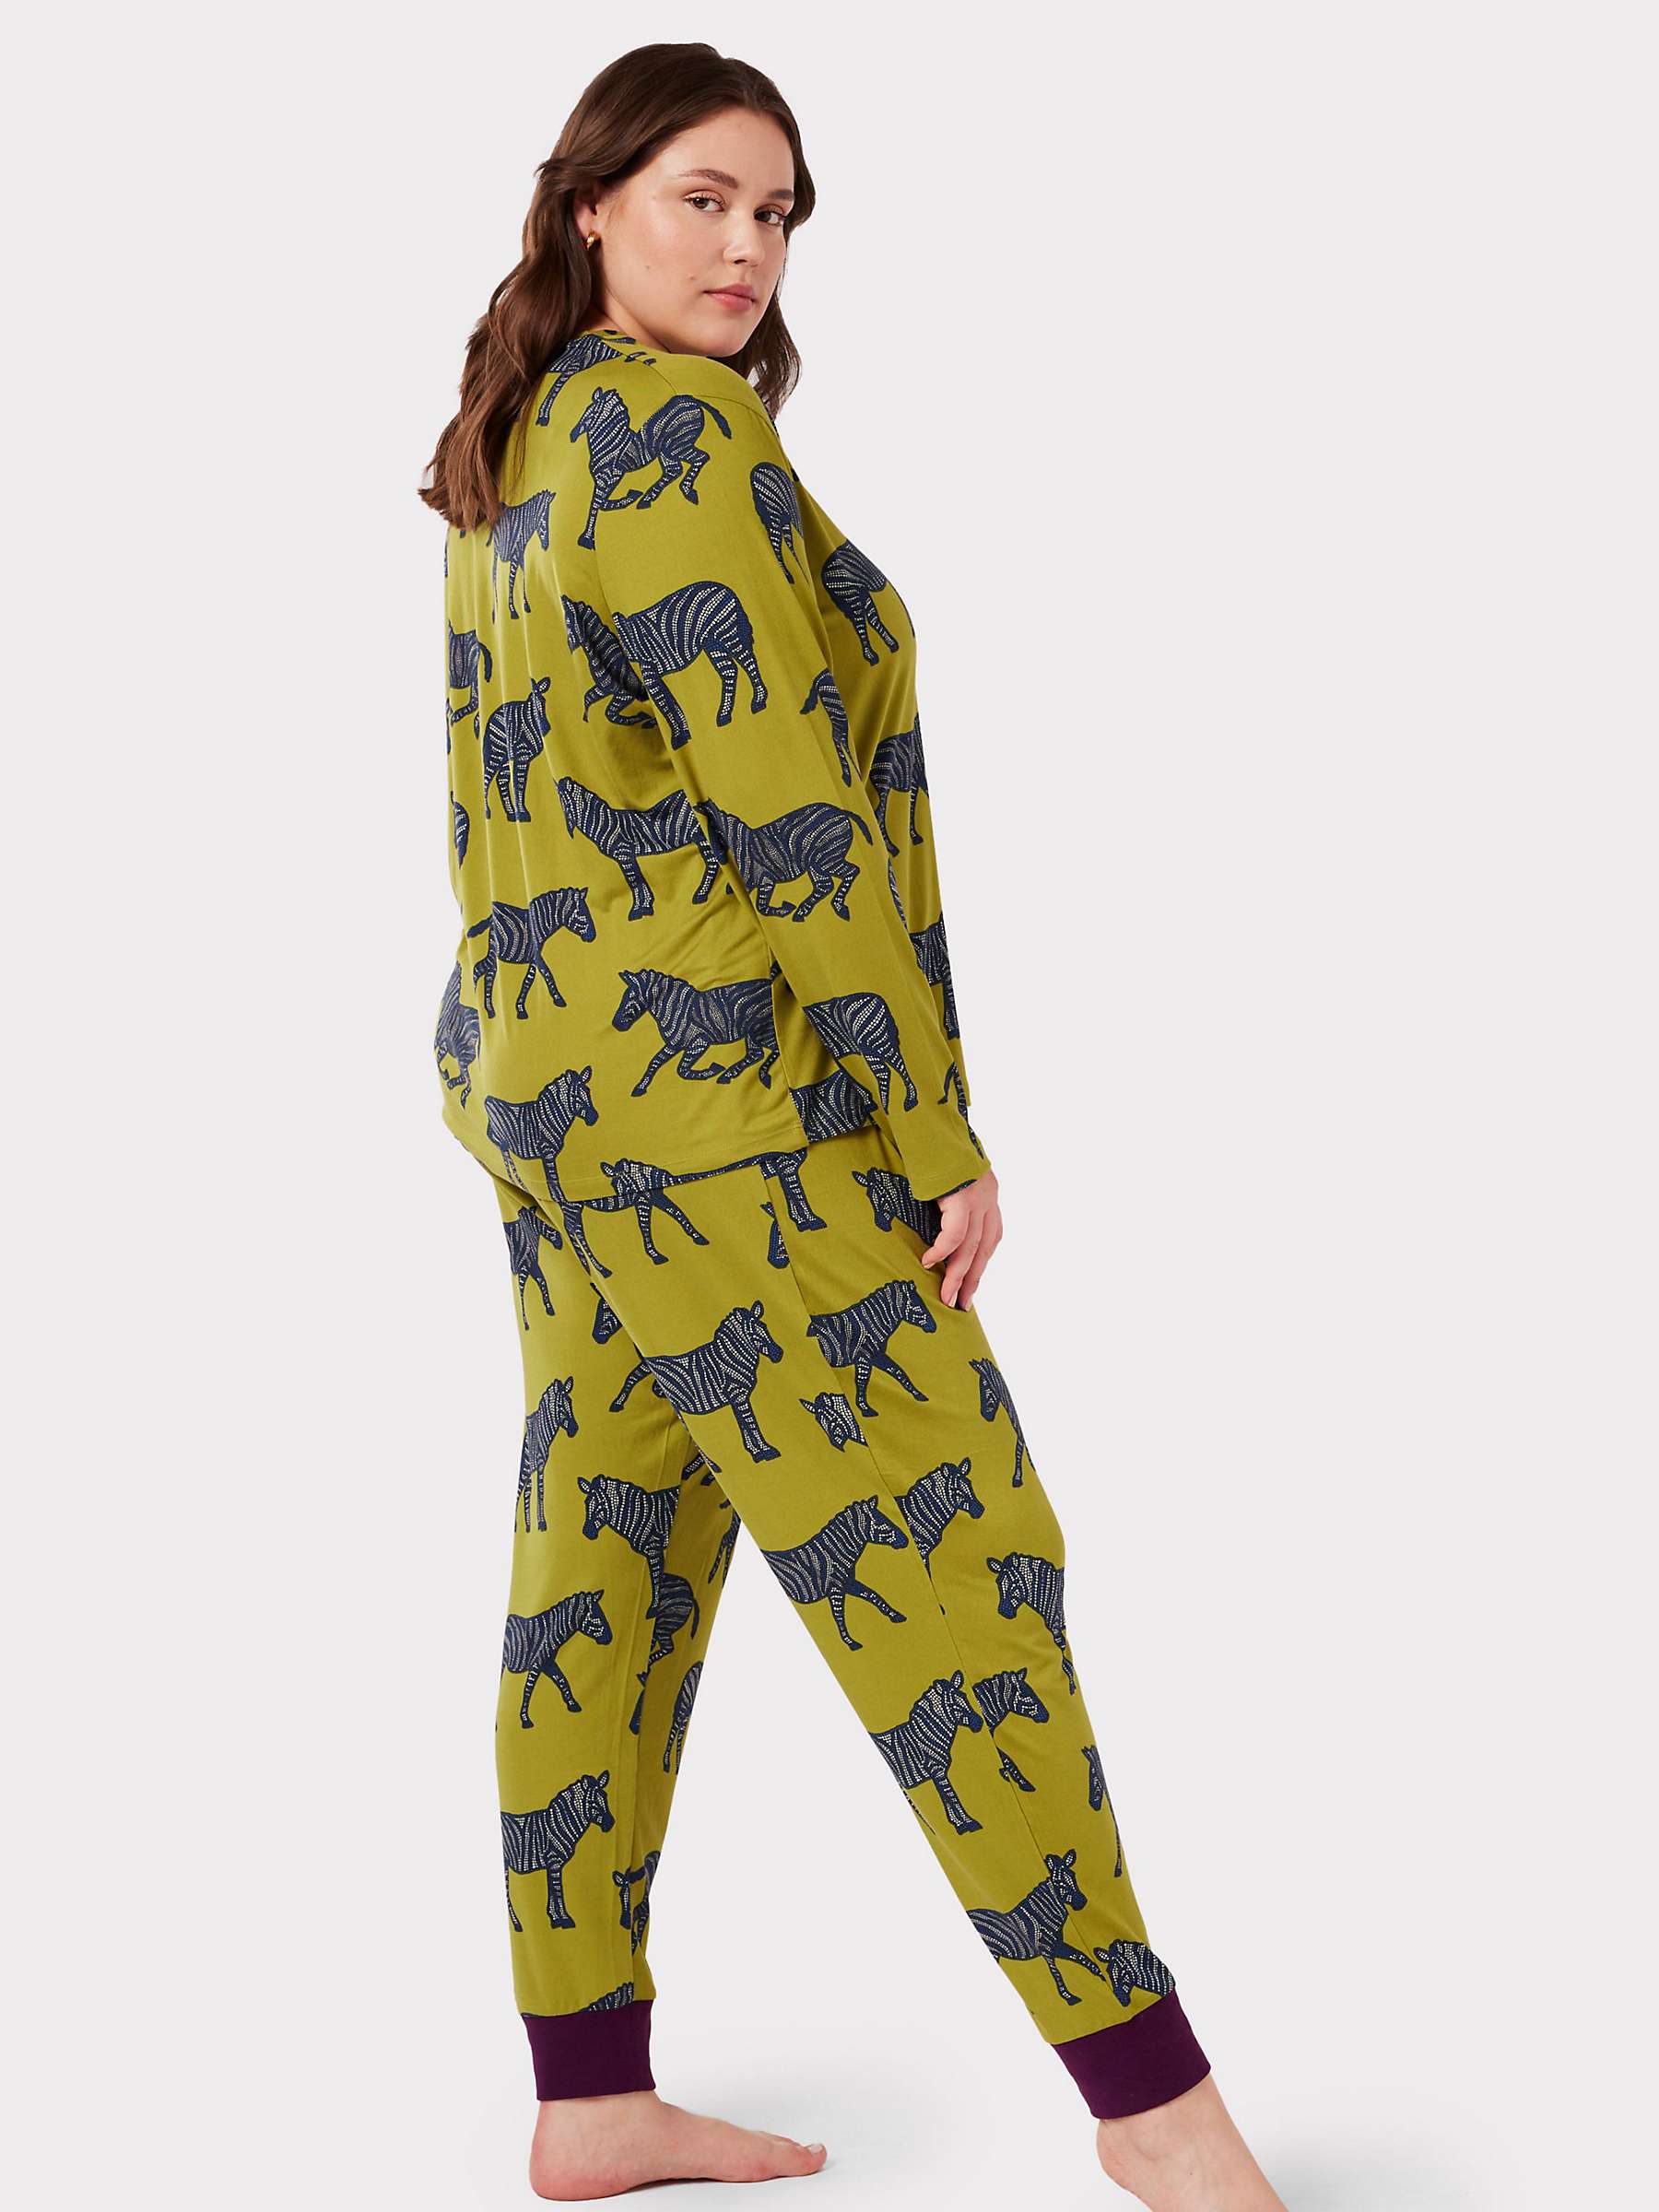 Chelsea Peers Curve Zebra Print Long Pyjamas, Khaki at John Lewis ...